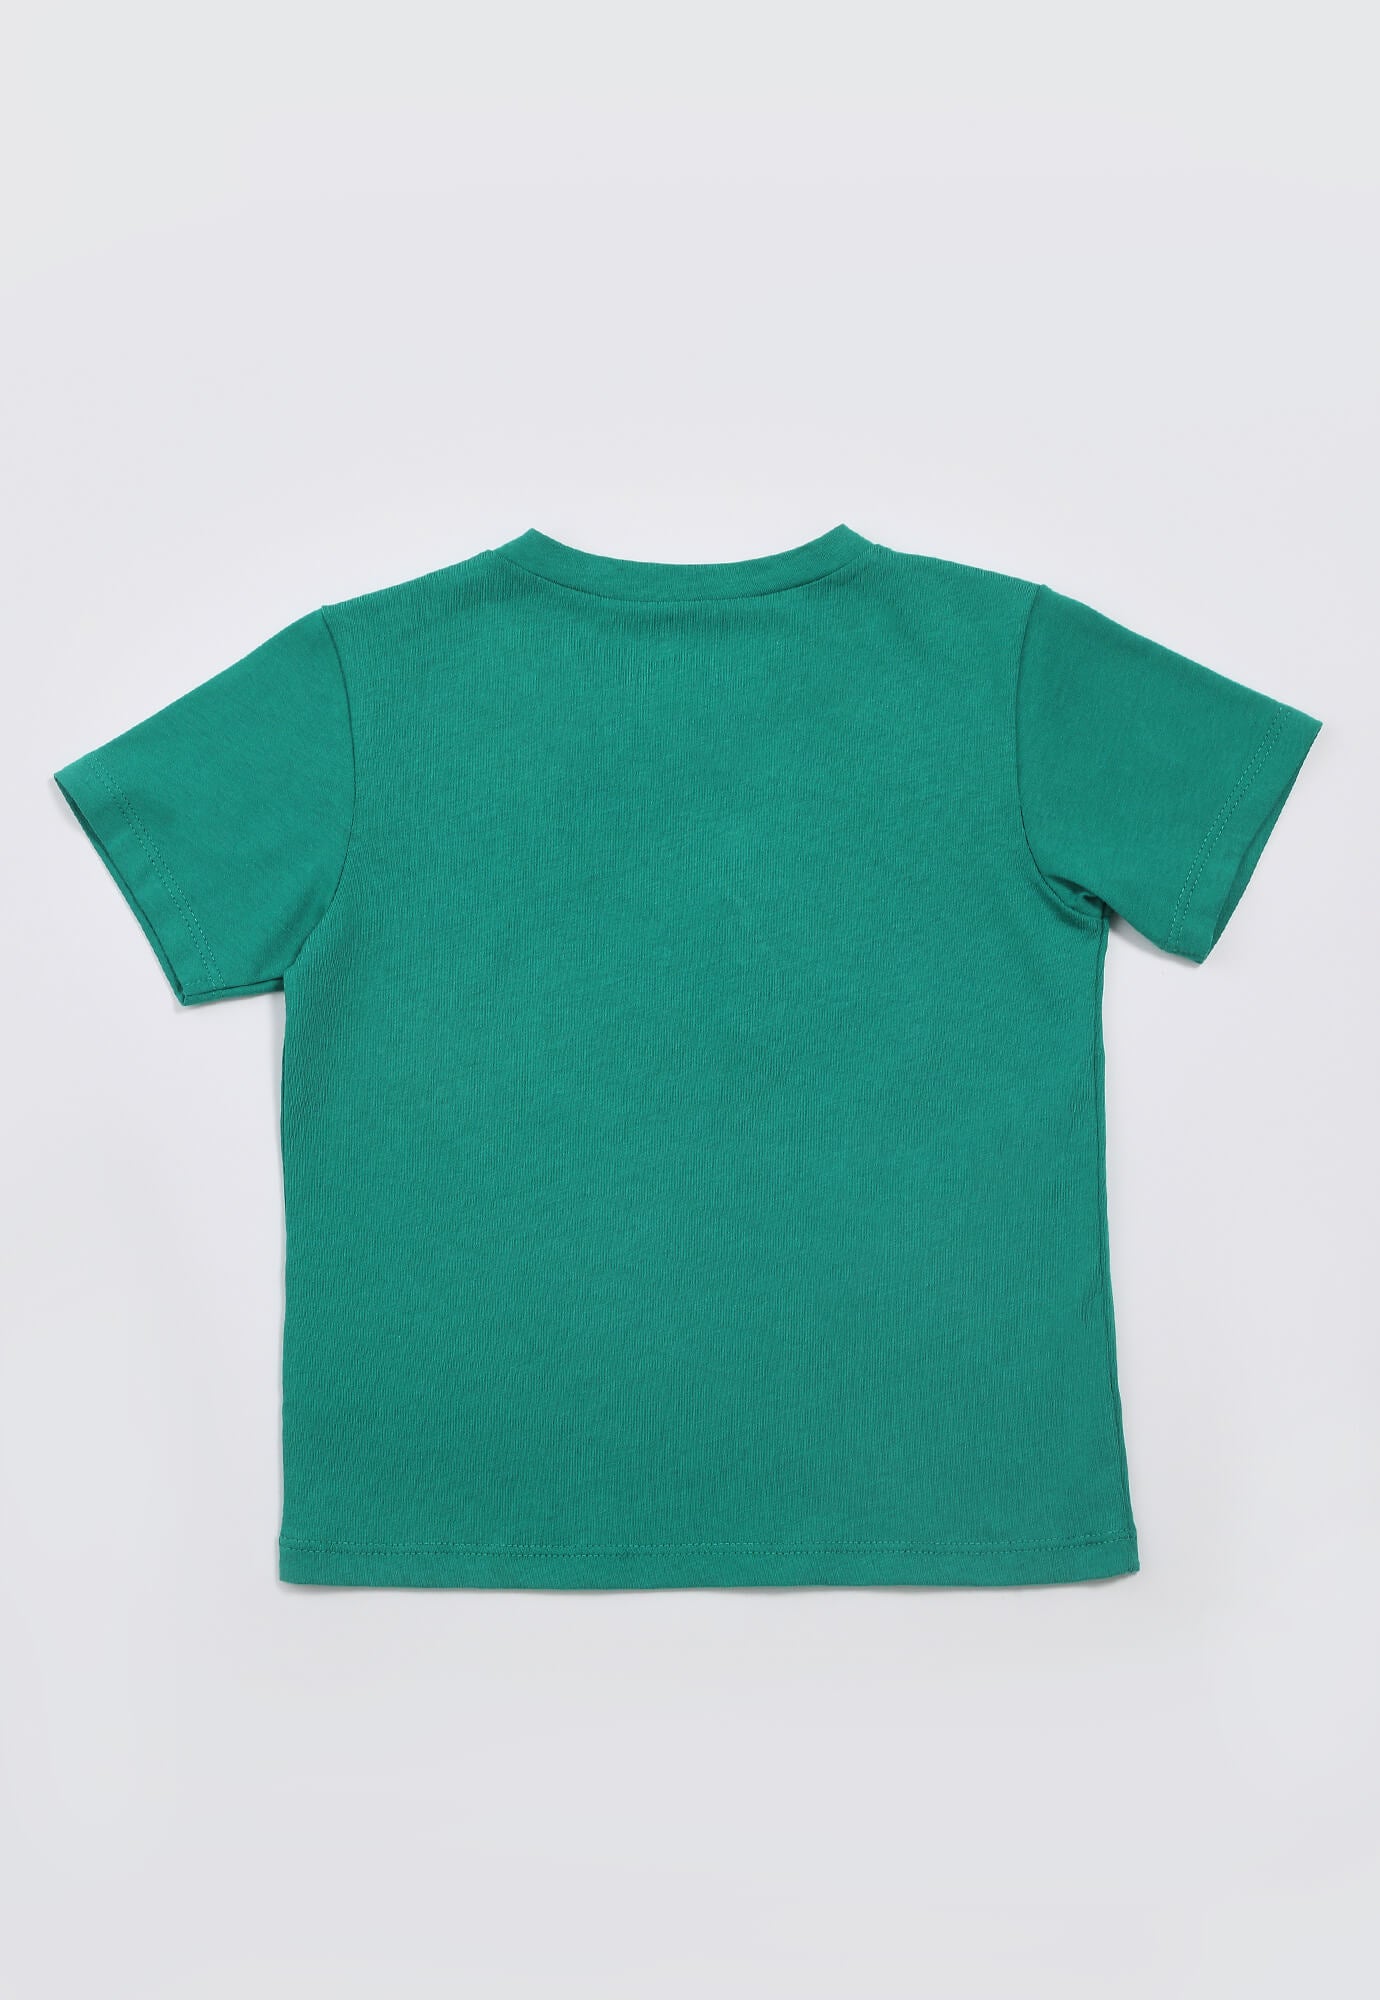 Camiseta verde estampada para bebé niño